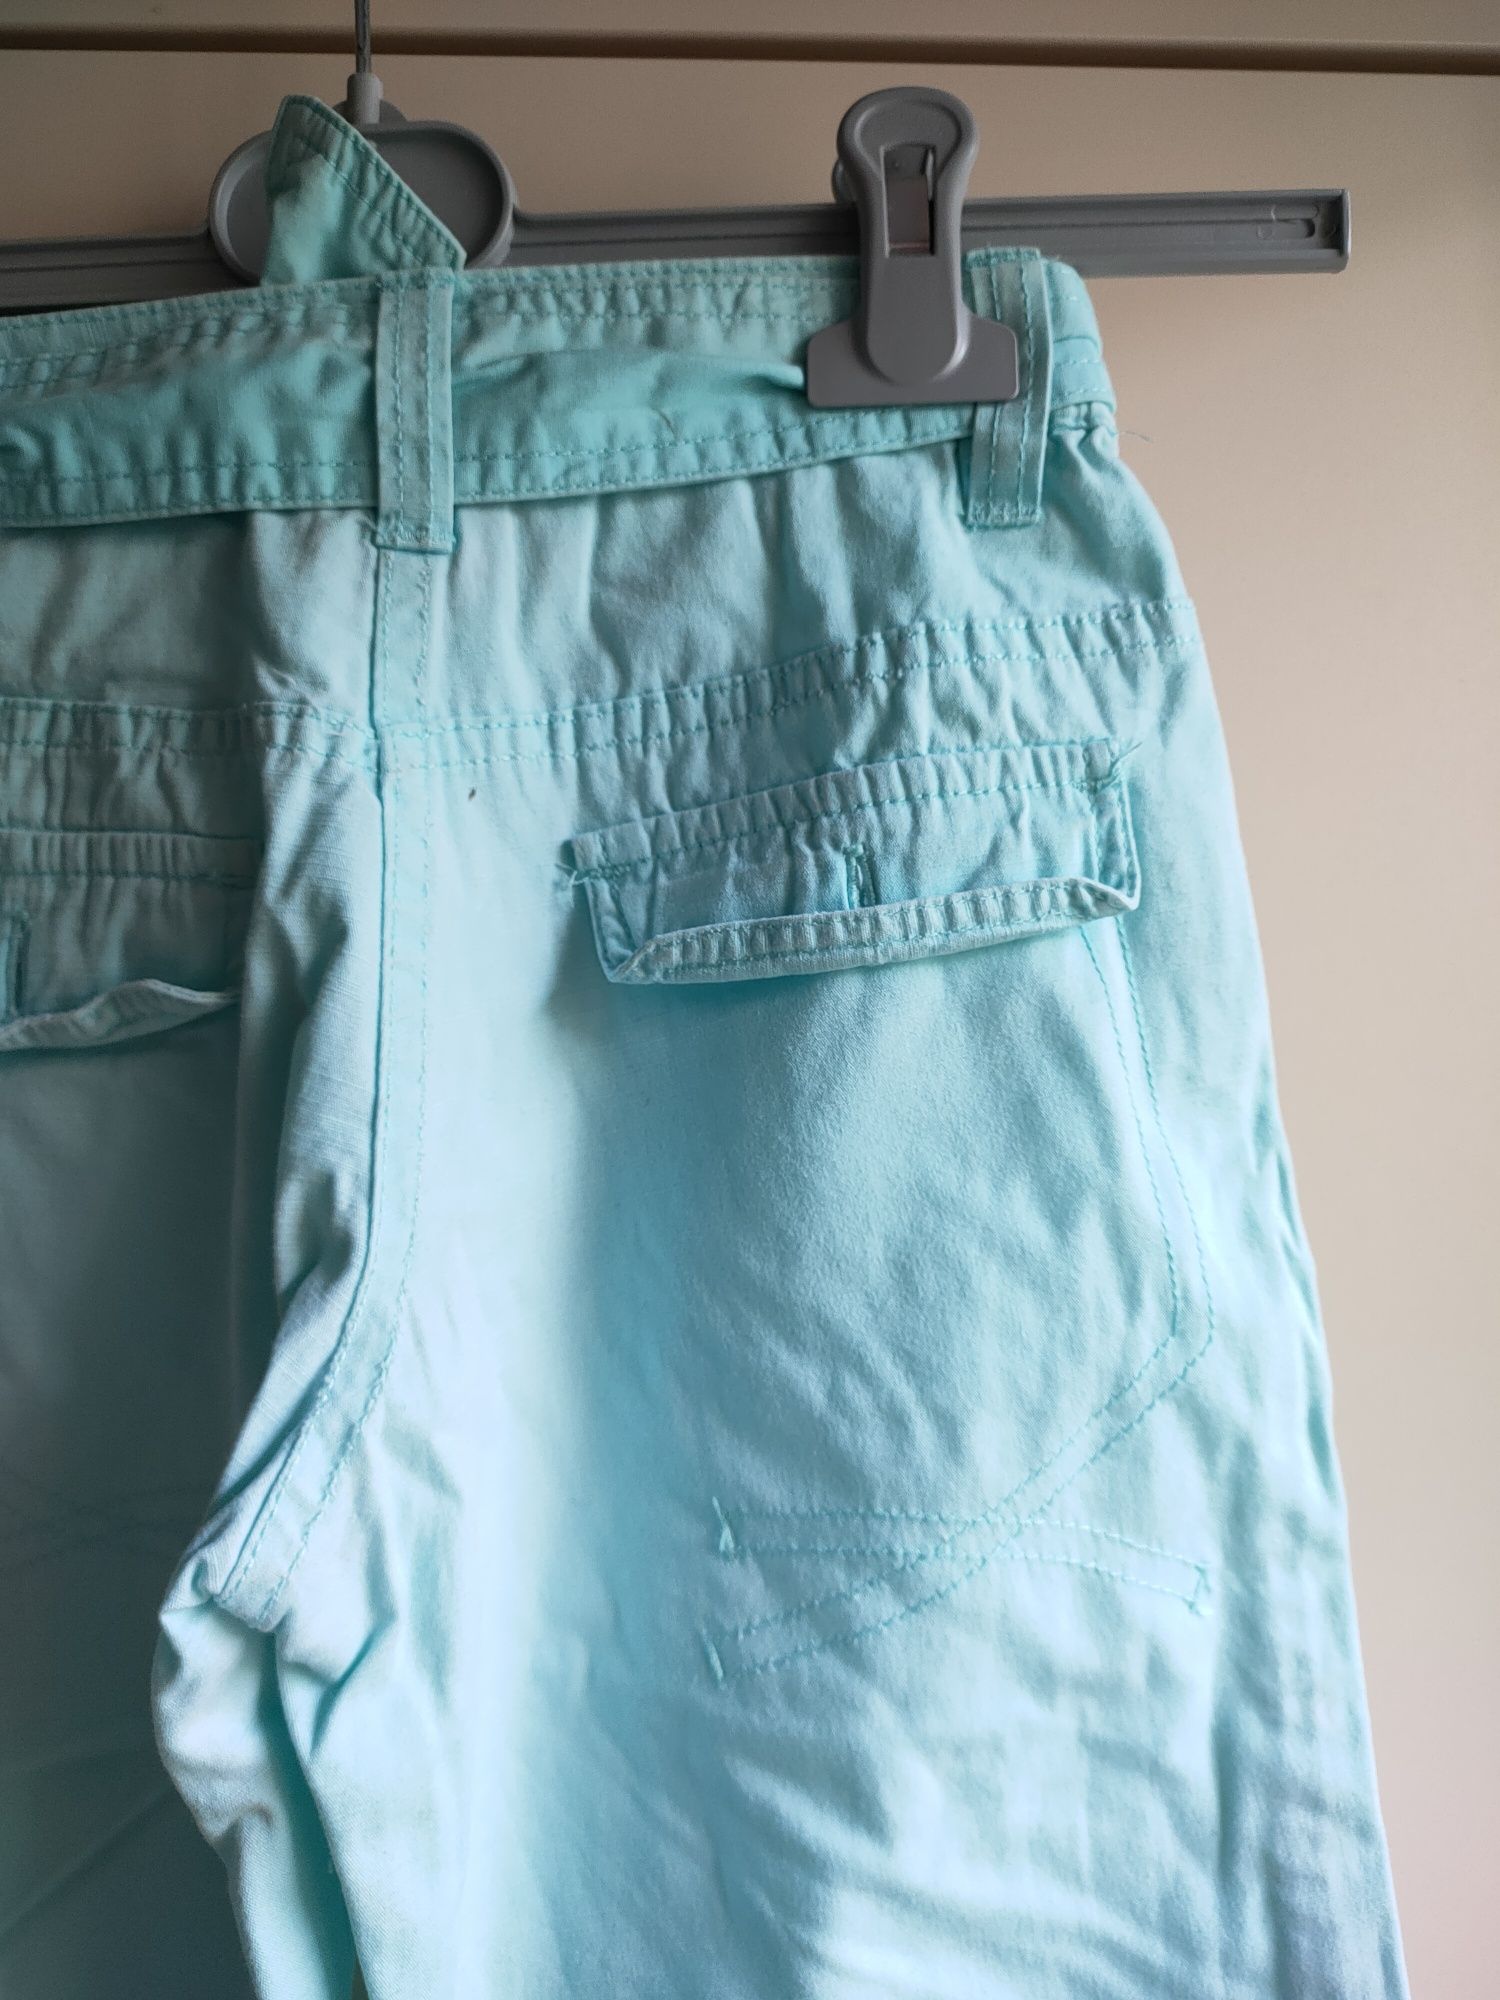 Błękitne spodnie rozmiar 128 cm